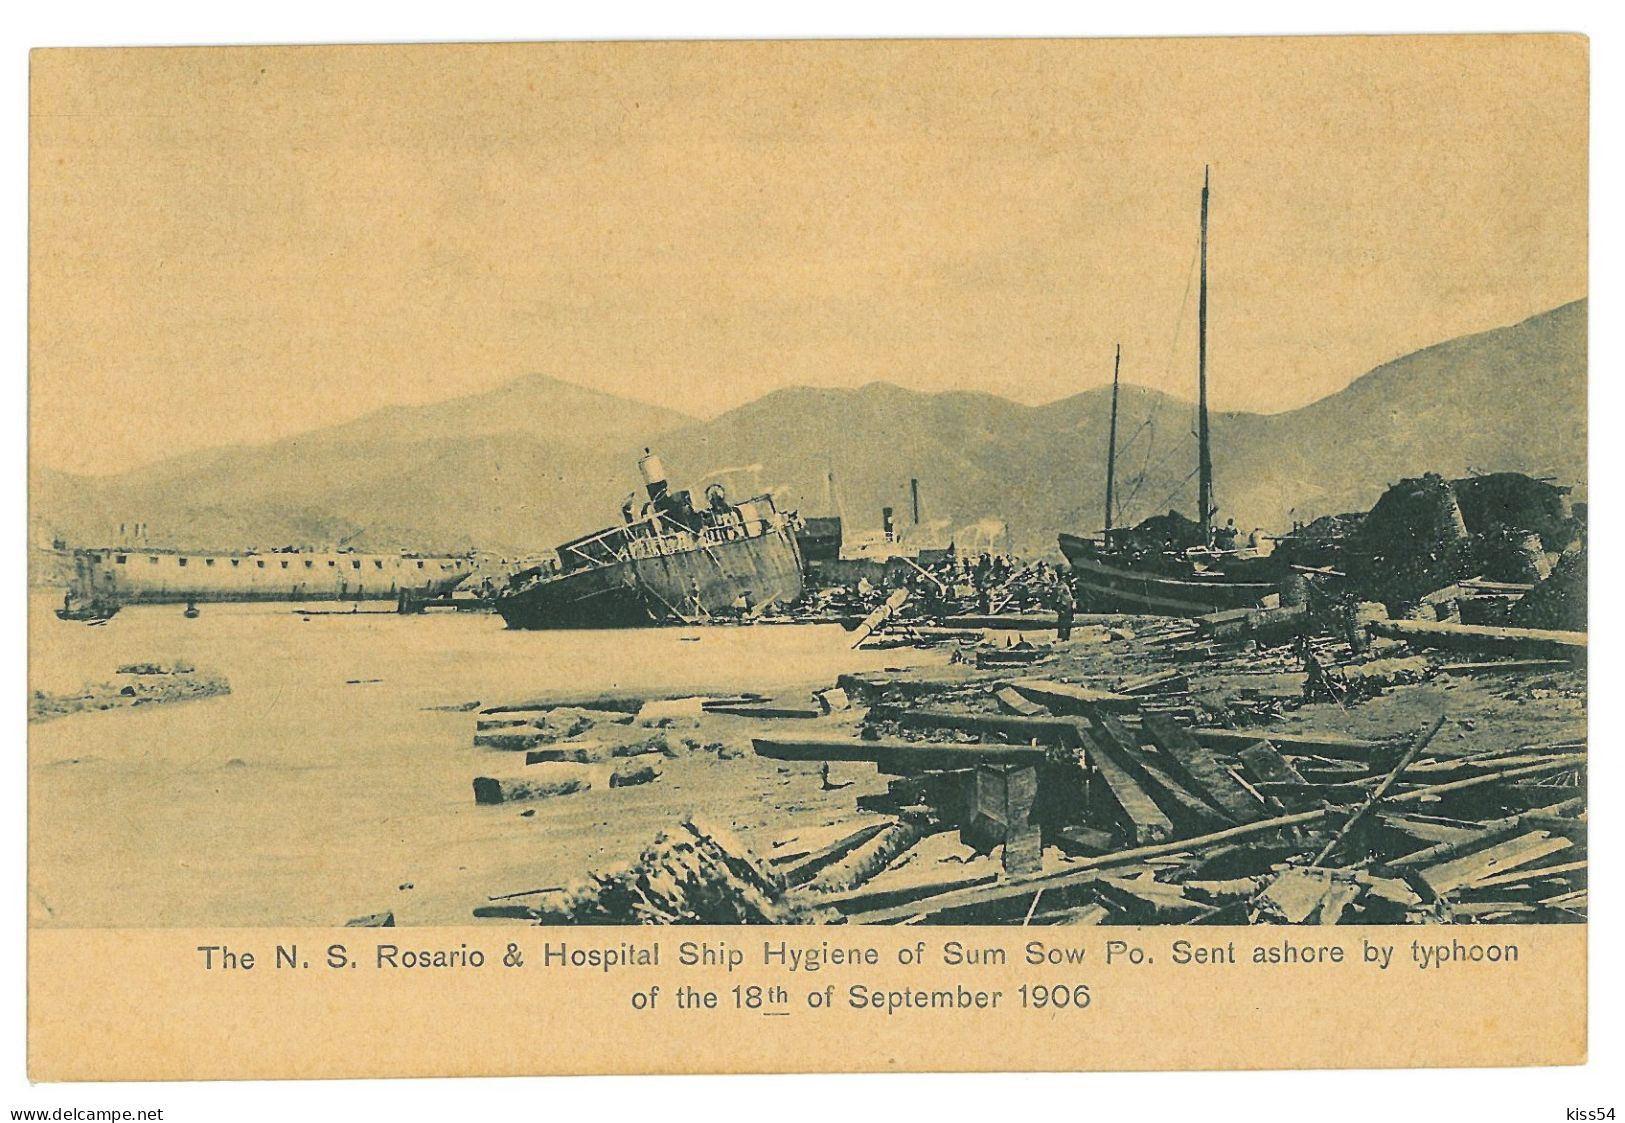 CH 37 - 19587 CATASTROPHE, Rosario & Hospital Ship, Typhoon, China - Old Postcard - Unused - 1906 - Chine